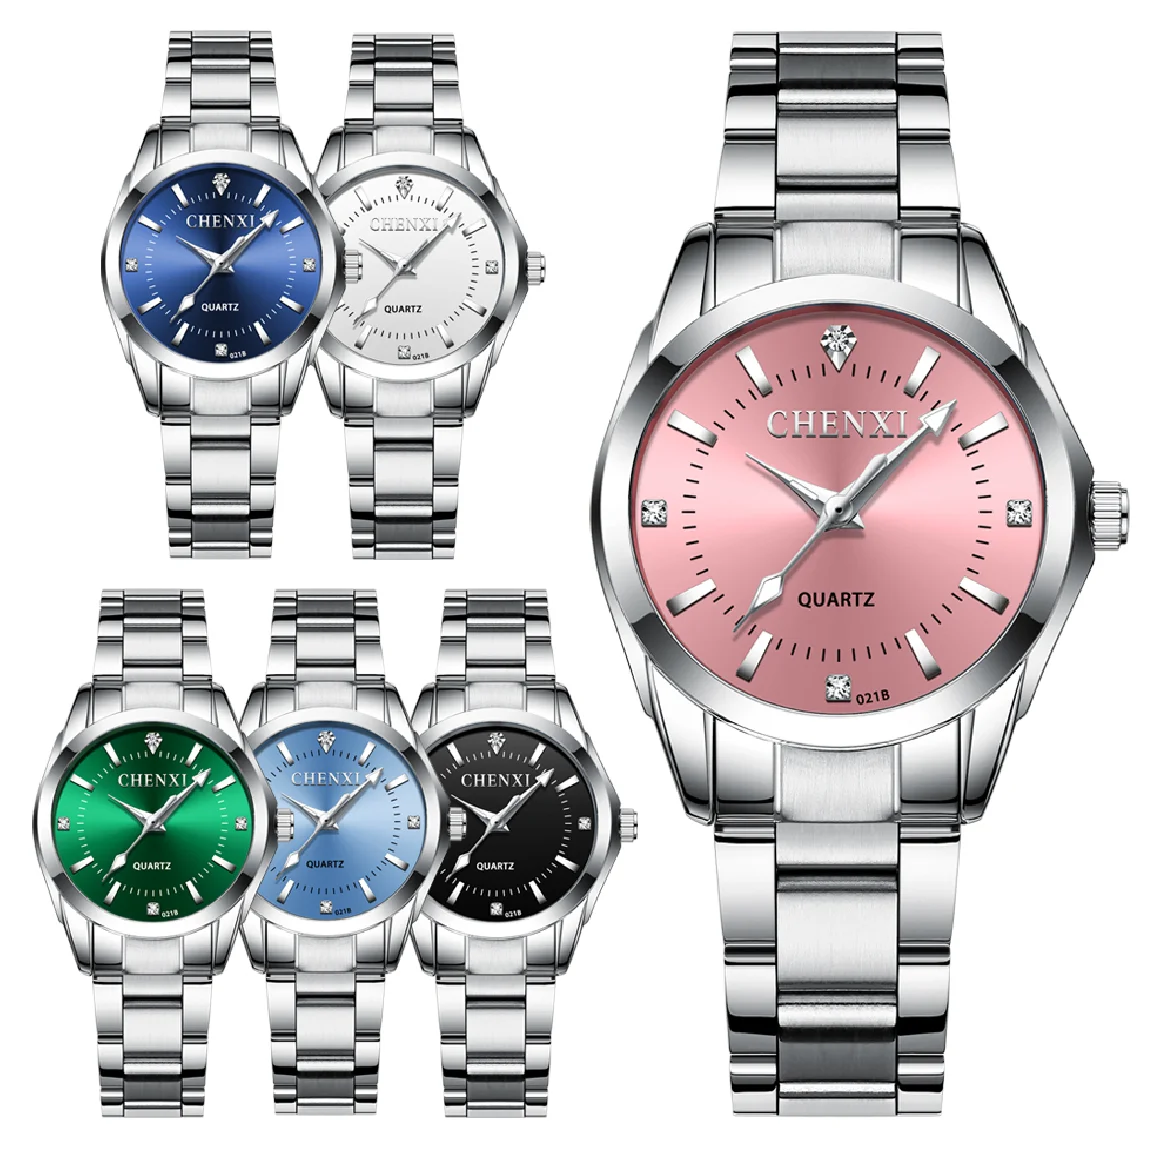 CHENXI Lady Rhinestone Fashion Watch Women Quartz Watch Women's Wrist watches Female Dress Clock xfcs relogio feminino enlarge